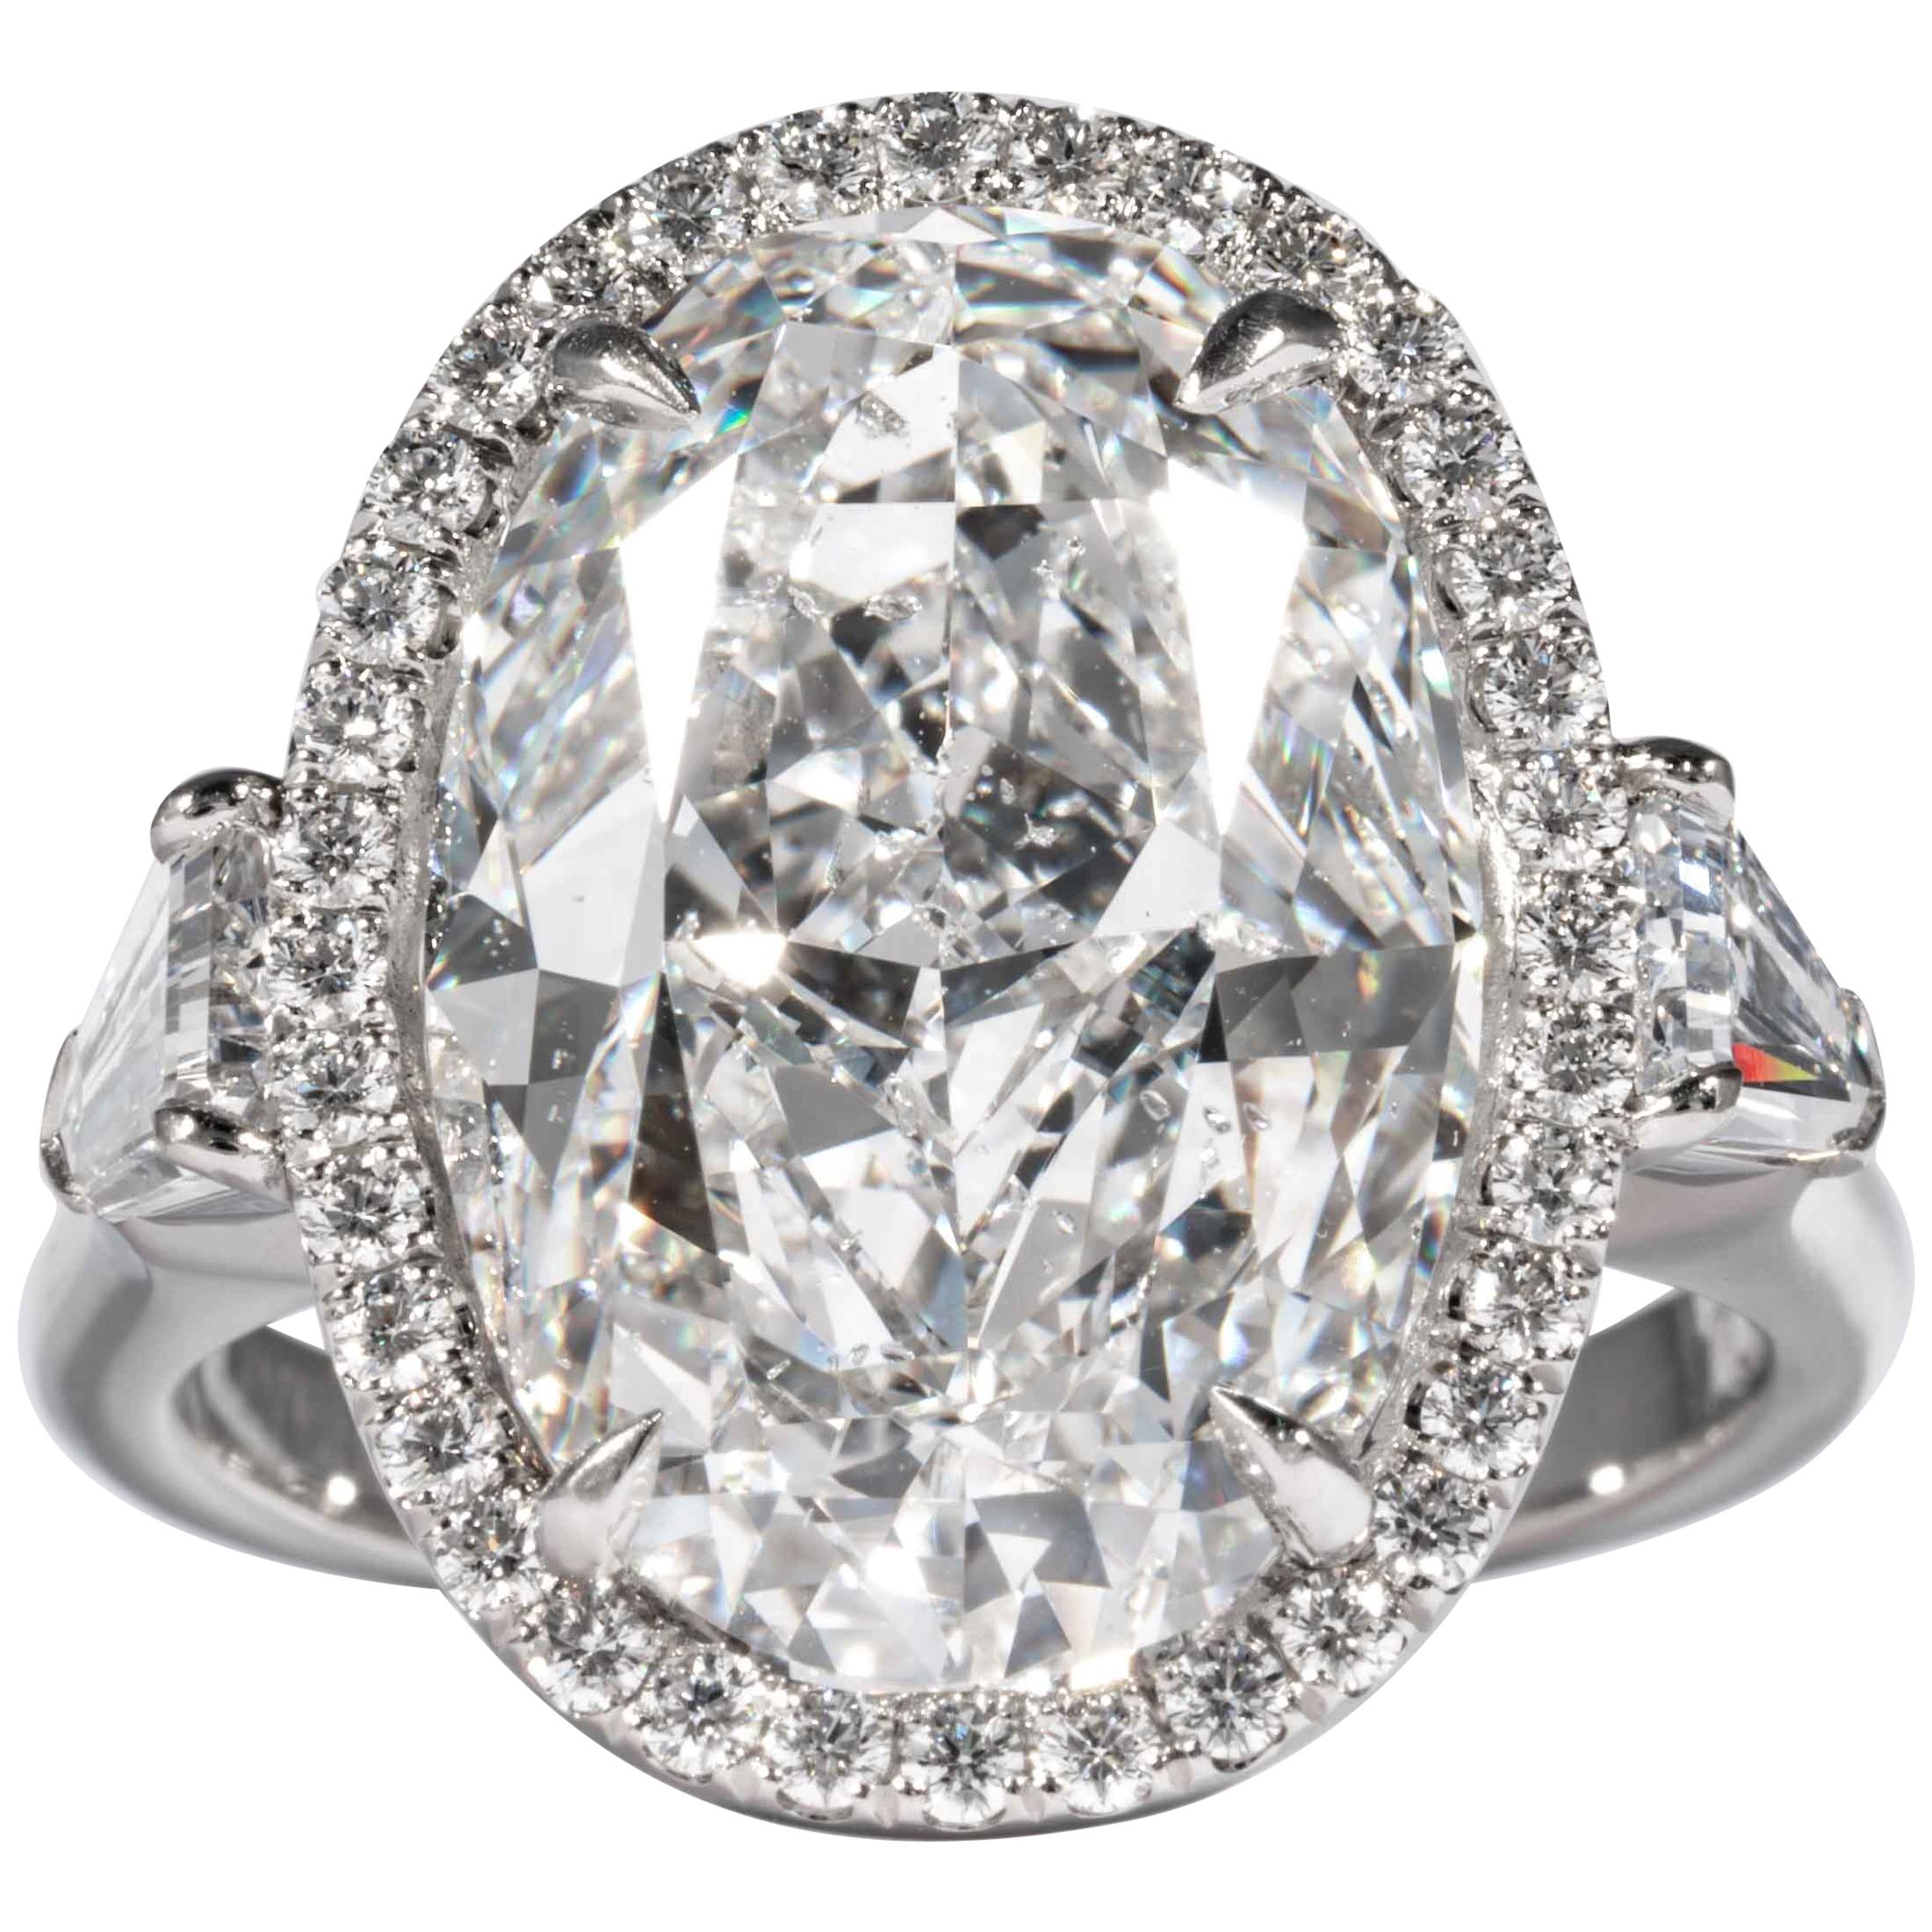 Shreve, Crump & Low GIA Certified 10.14 Carat D SI2 Oval Cut Diamond Ring